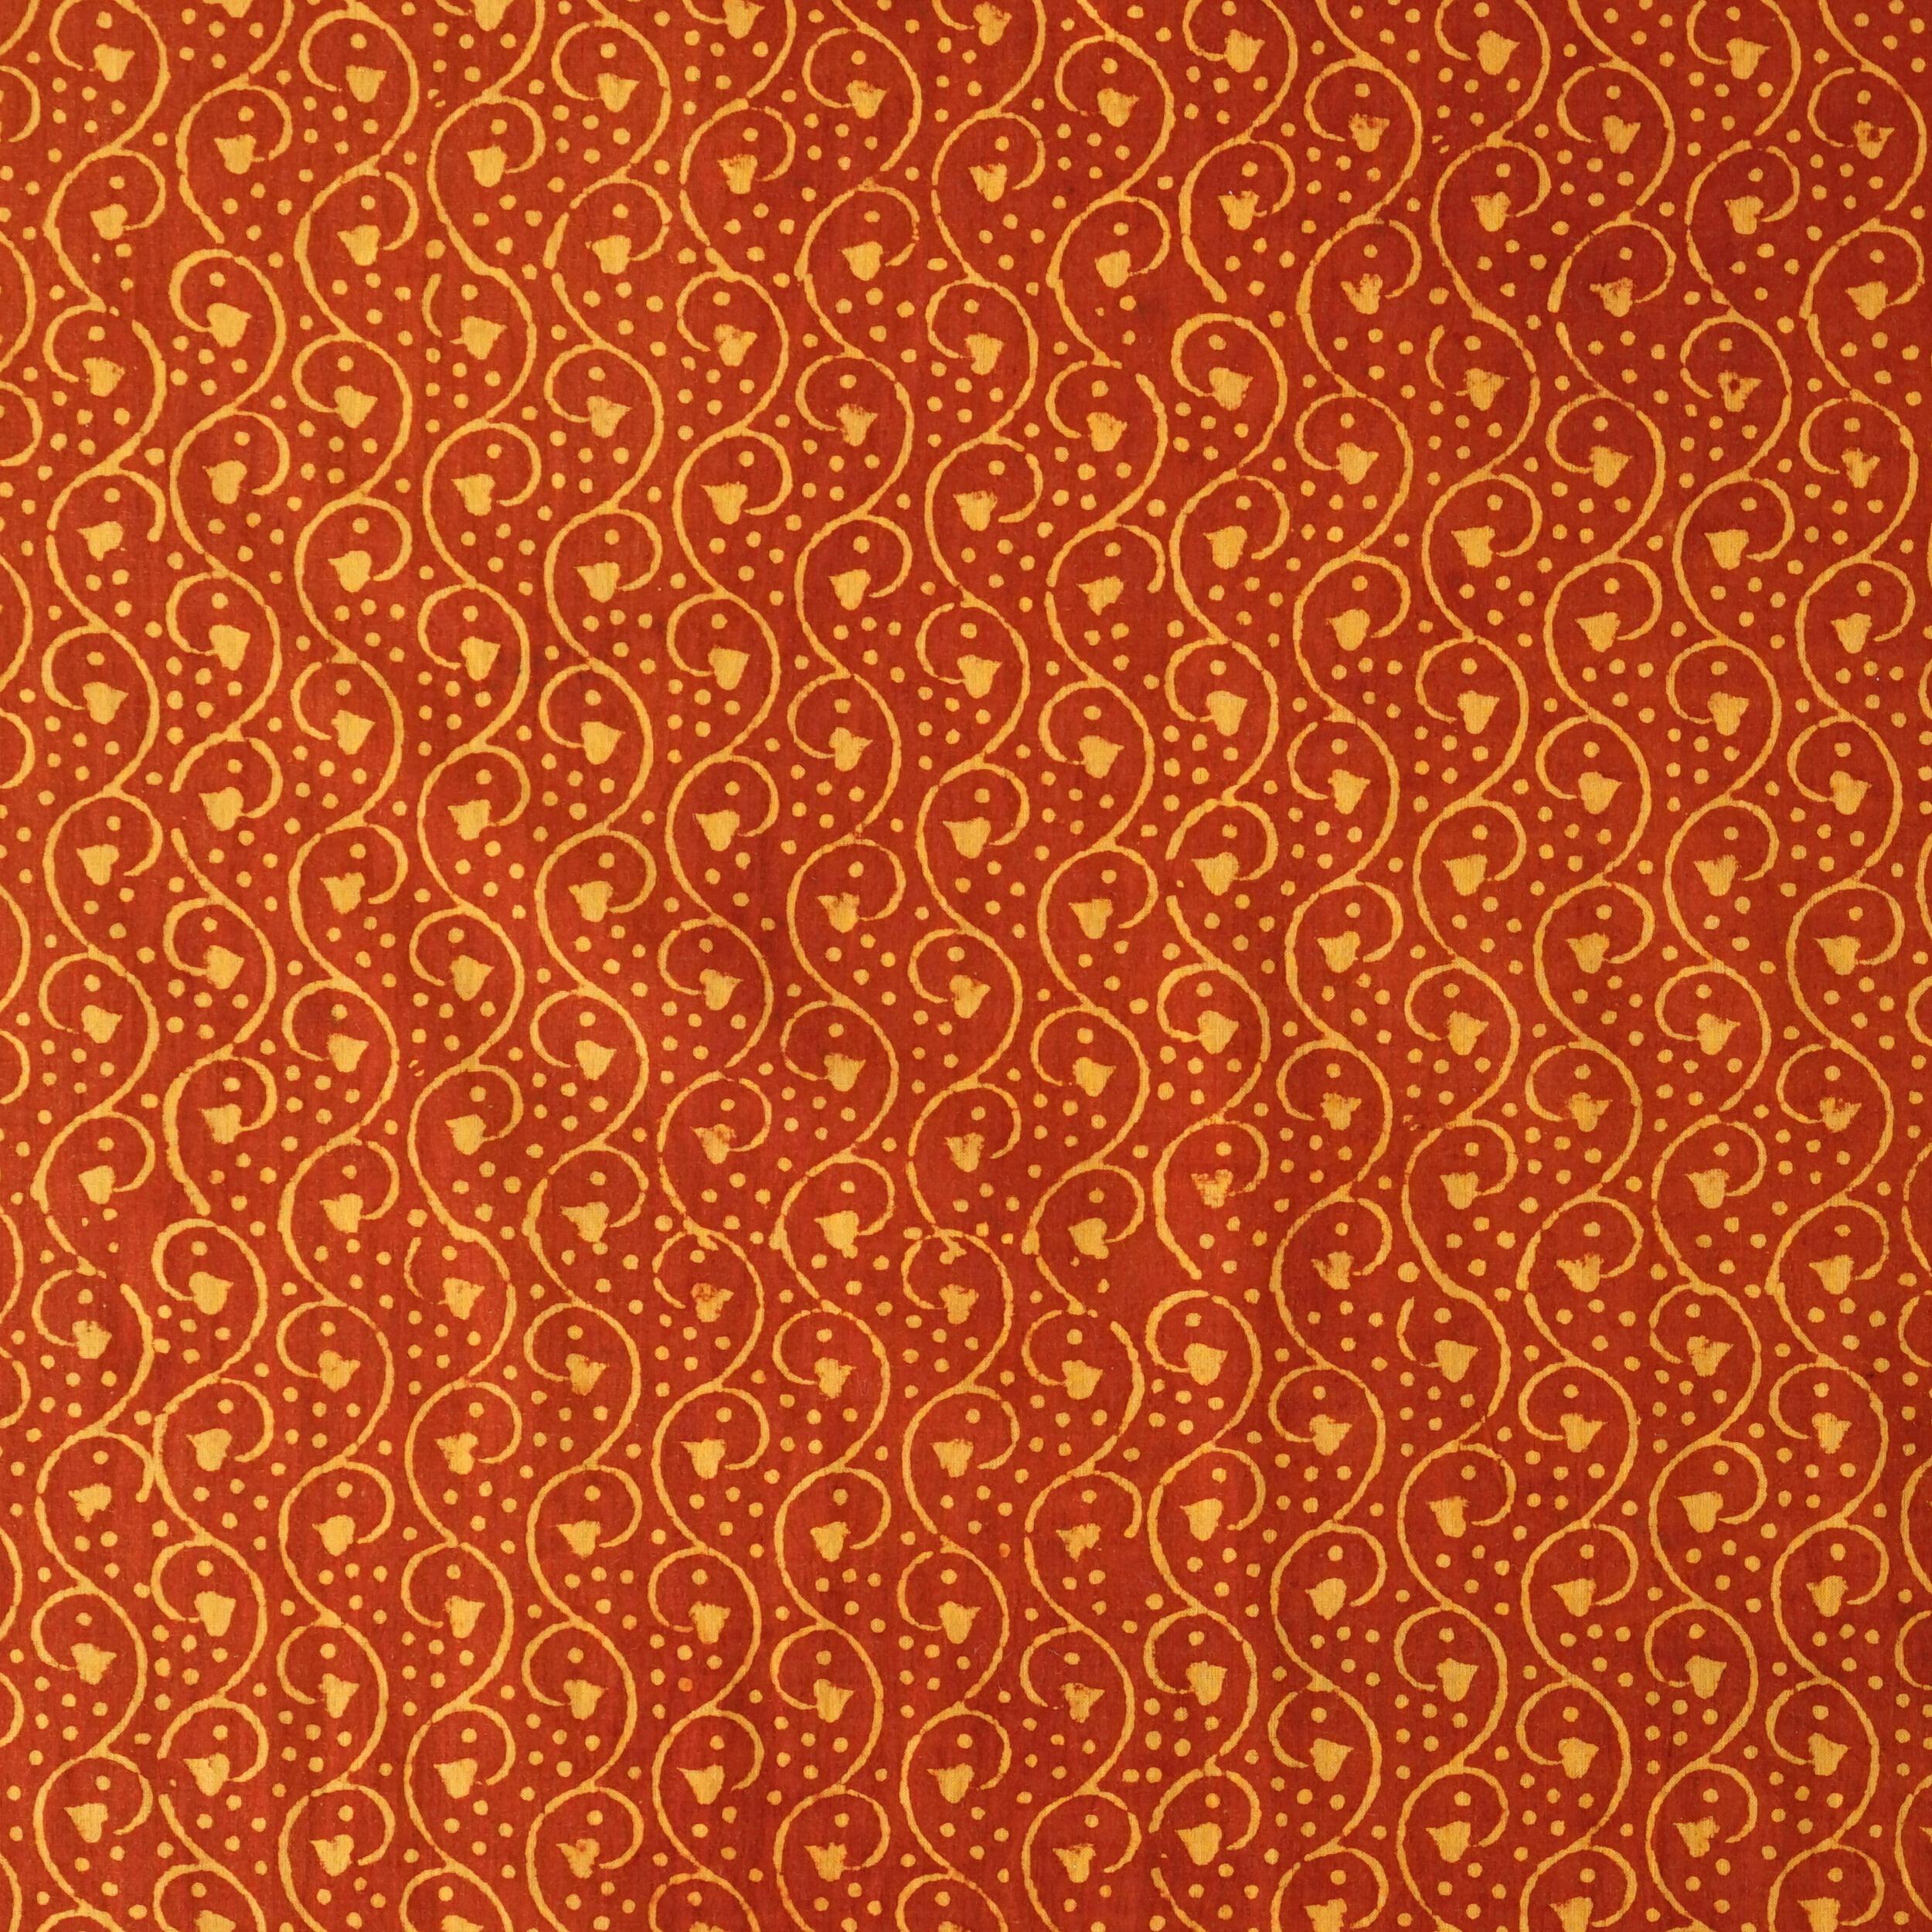 3 - AHM45 - Block-Printed Cotton - Komorebi Print - Turmeric Yellow & Alizarin Red Dyes - Flat